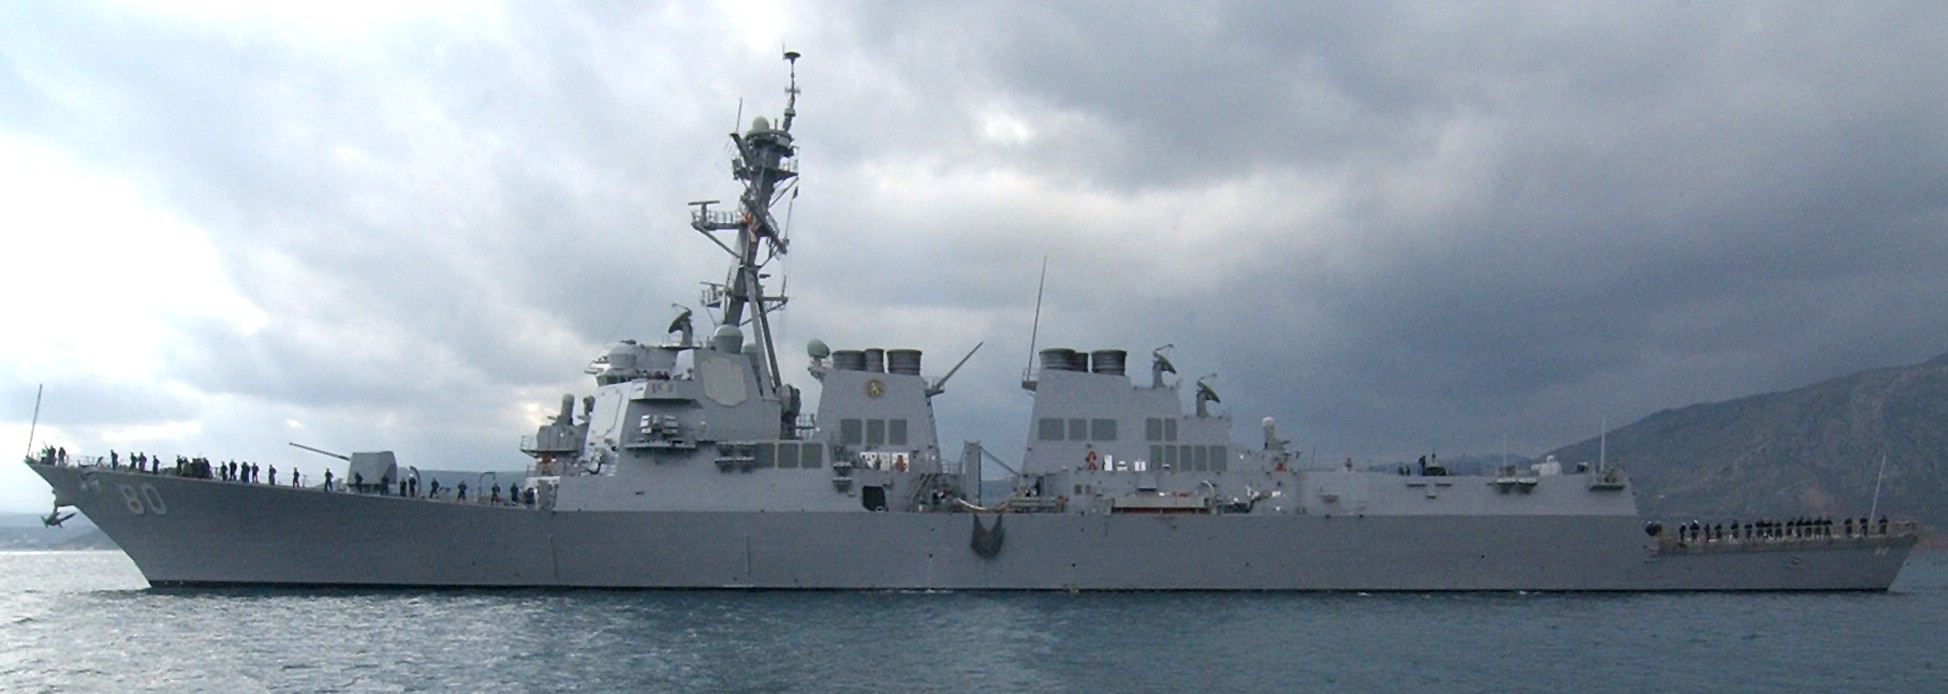 ddg-80 uss roosevelt guided missile destroyer arleigh burke class us navy 13 souda bay crete greece